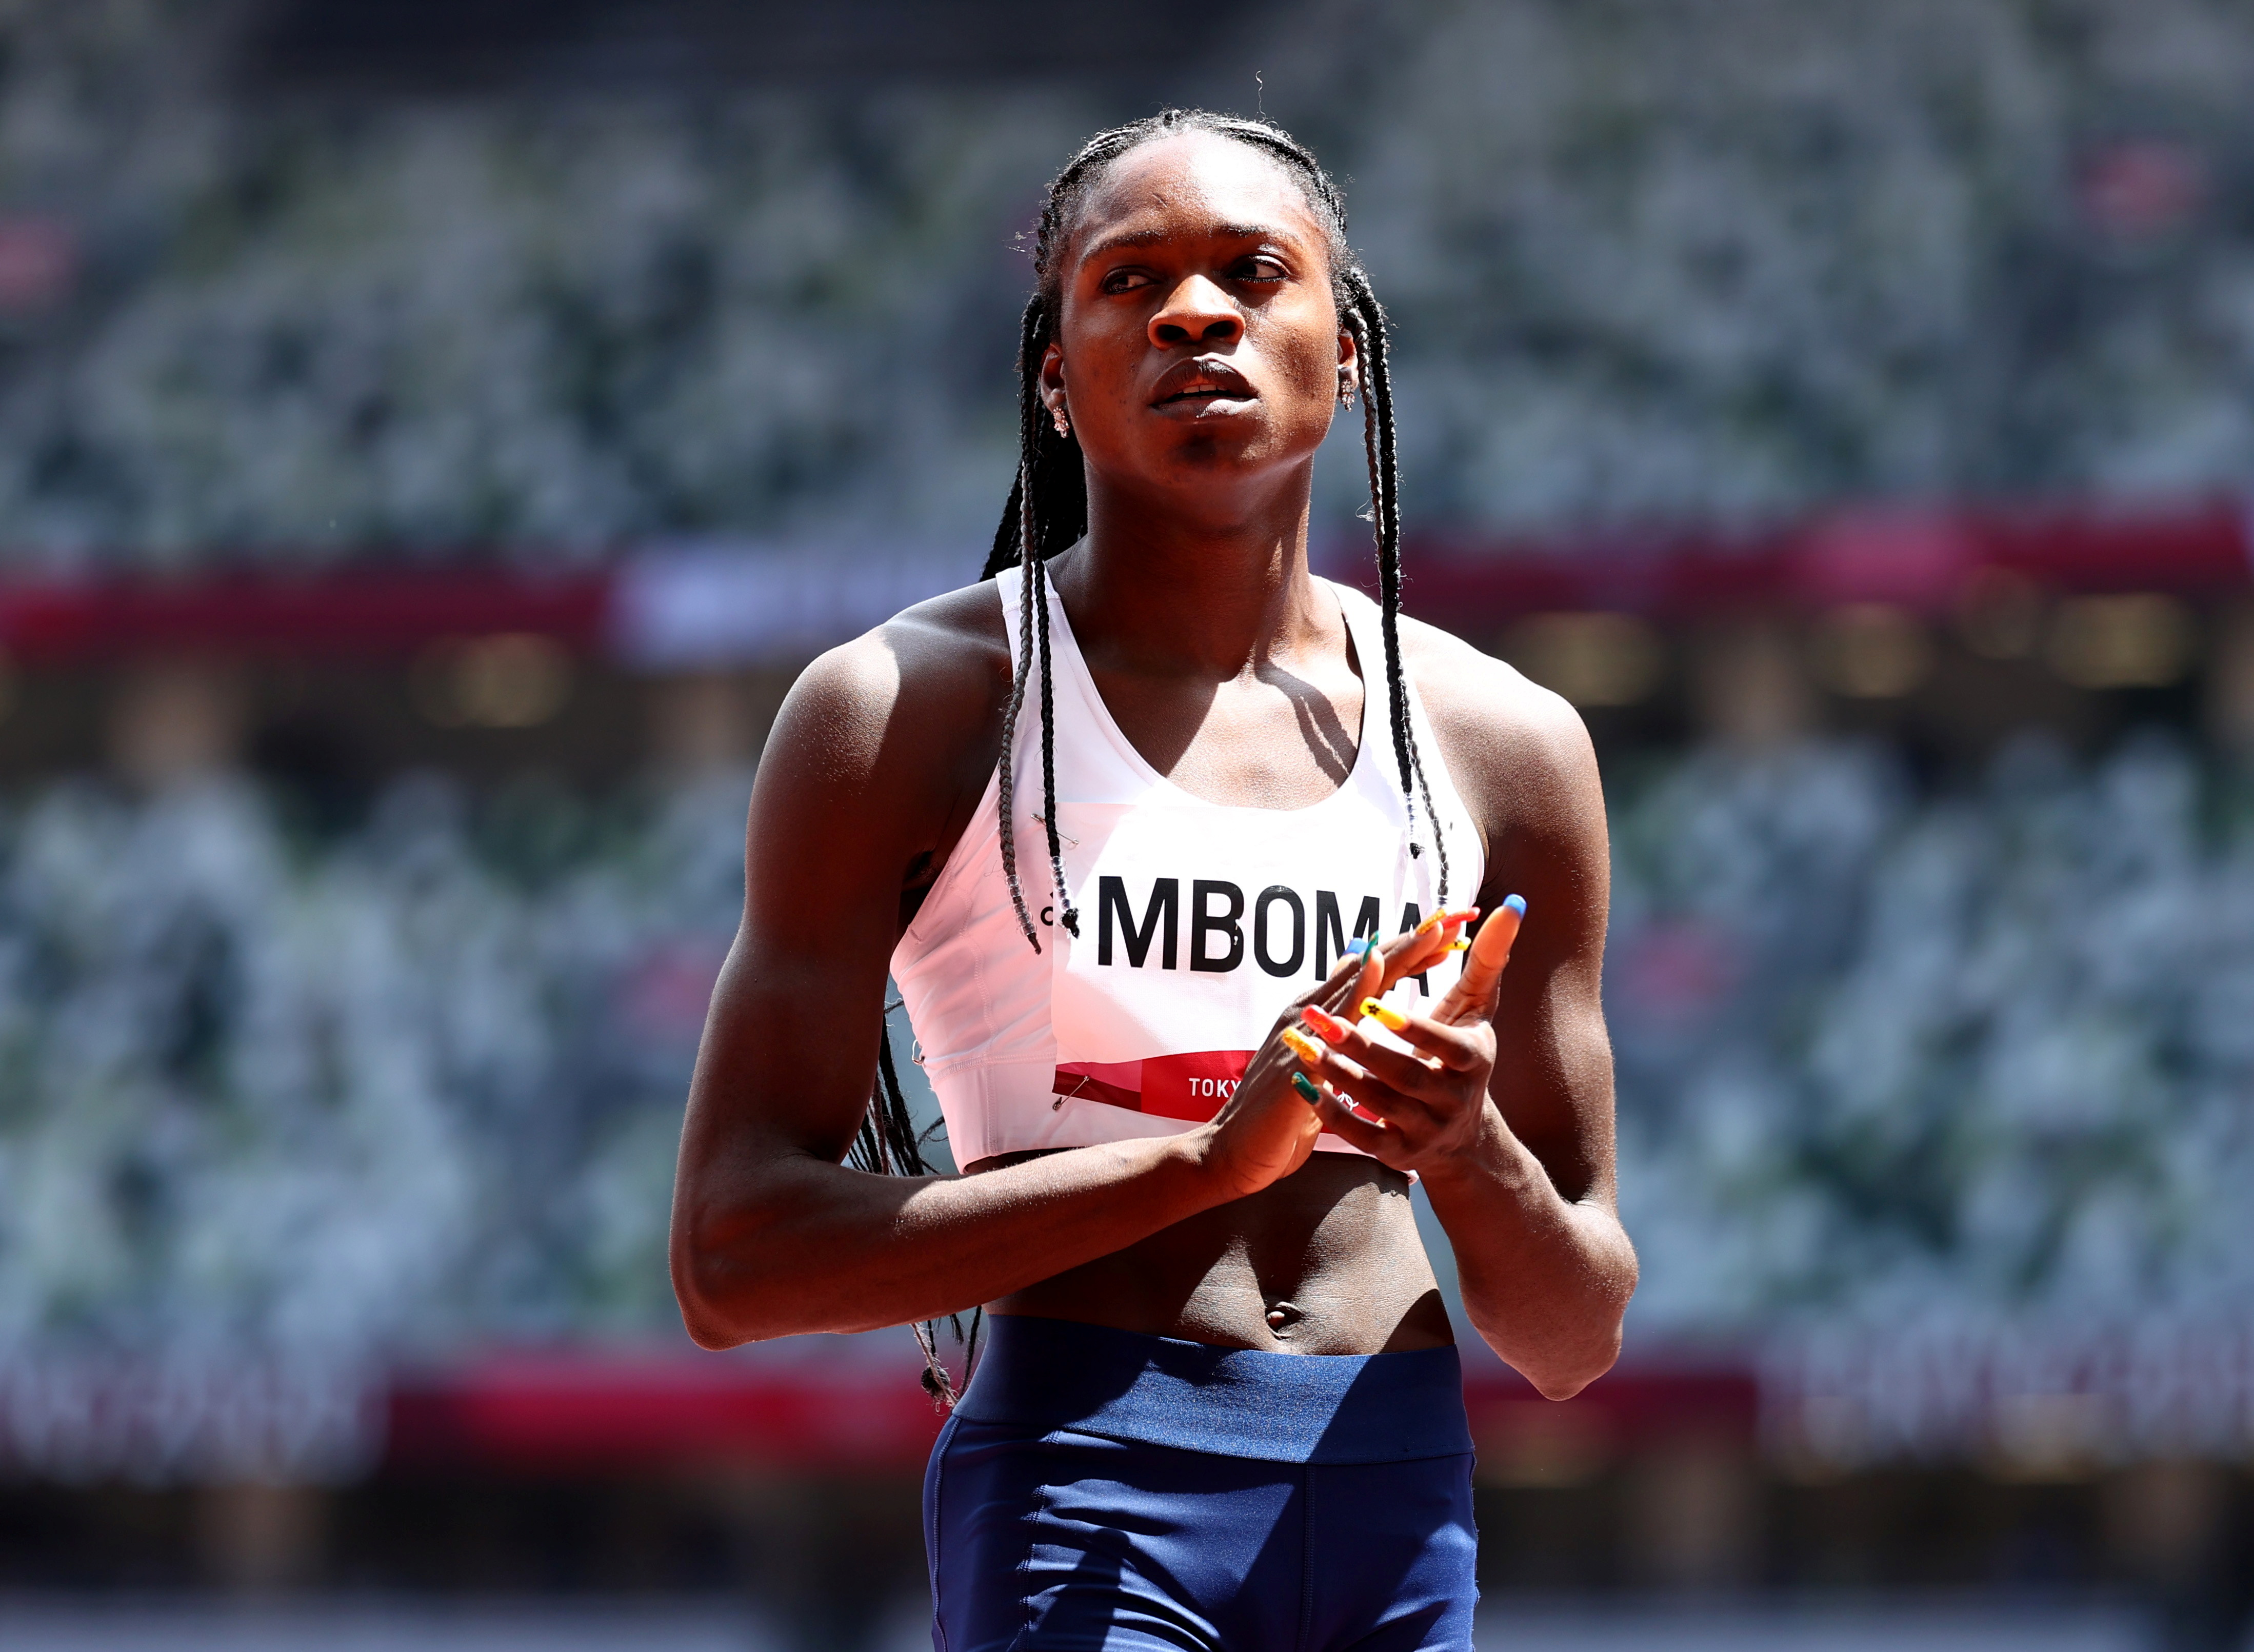 Athletics-Namibian sprinters resurrect 'paradox' of DSD rules